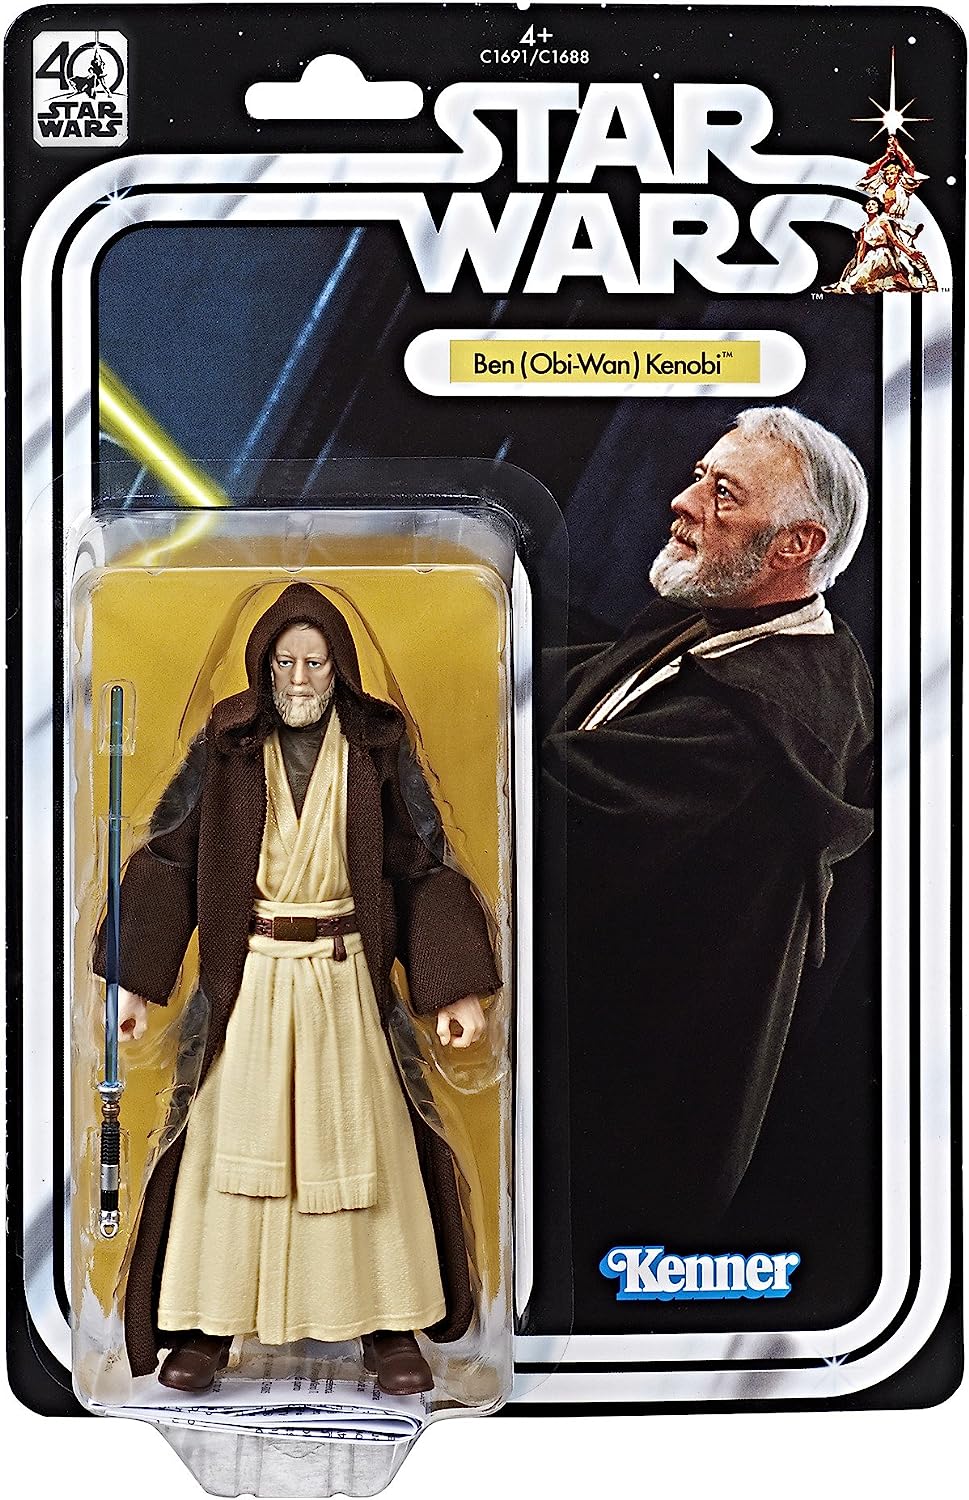 Star Wars Black Series 6 inch Ben (Obi-wan) Kenobi 40th Anniversary